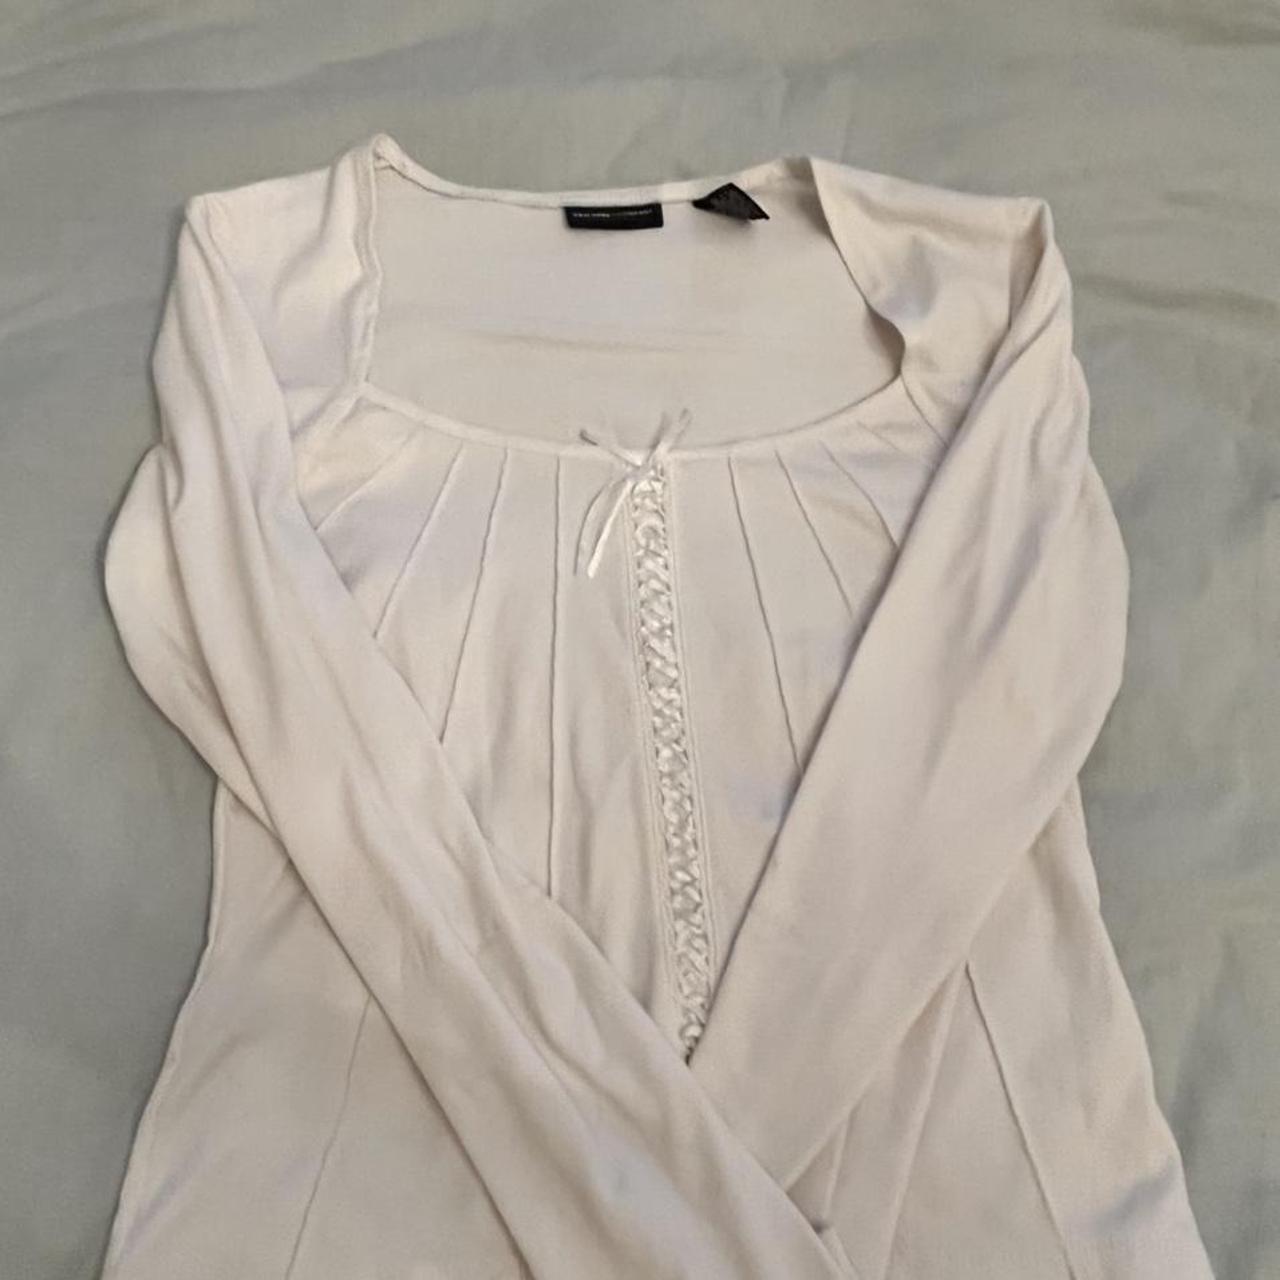 Square neck coquette corset style blouse :)) perfect... - Depop